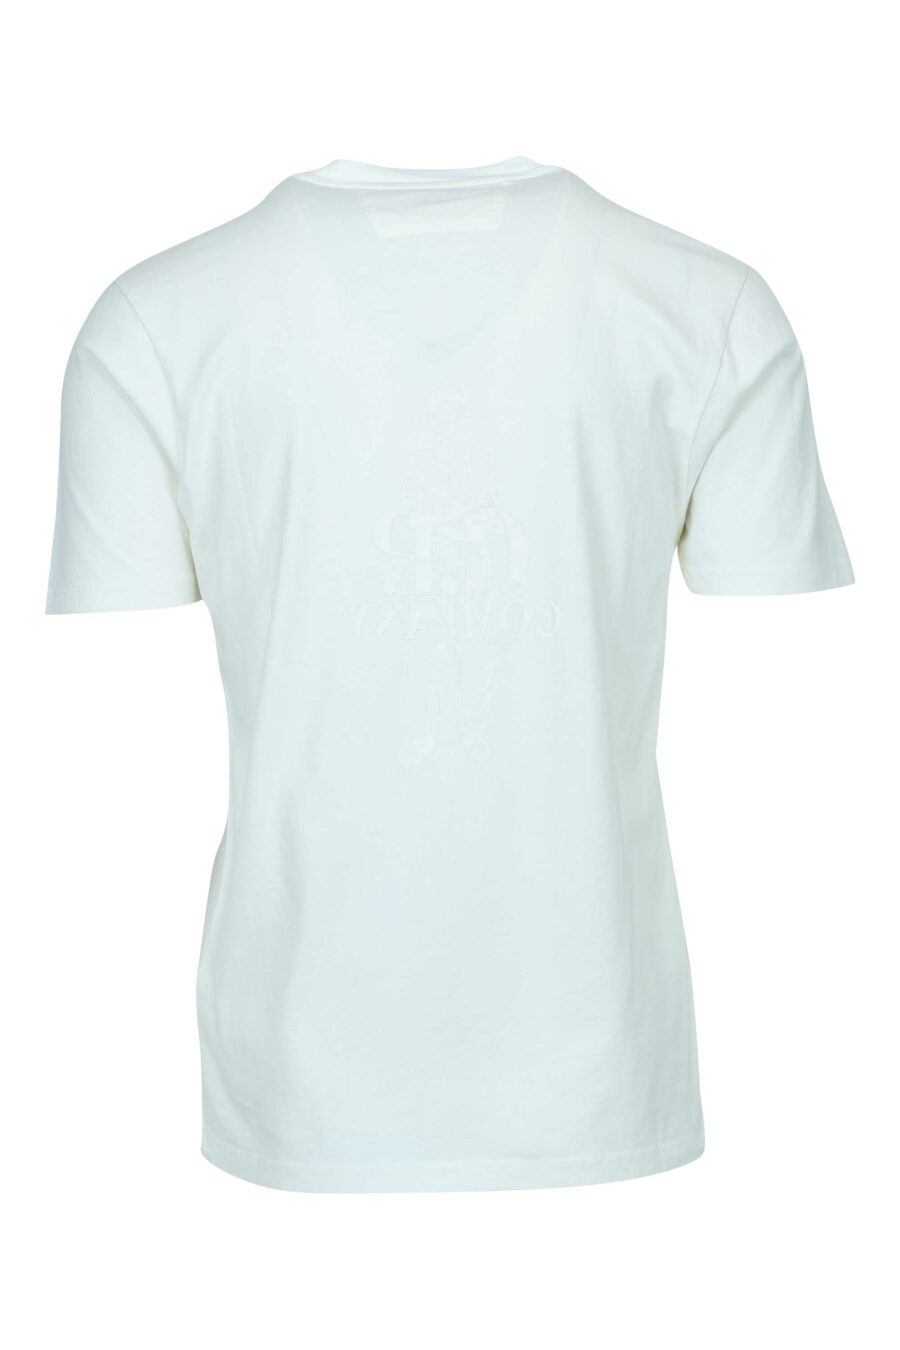 White T-shirt with sailor maxilogue and "cp" logo - 7620943776478 1